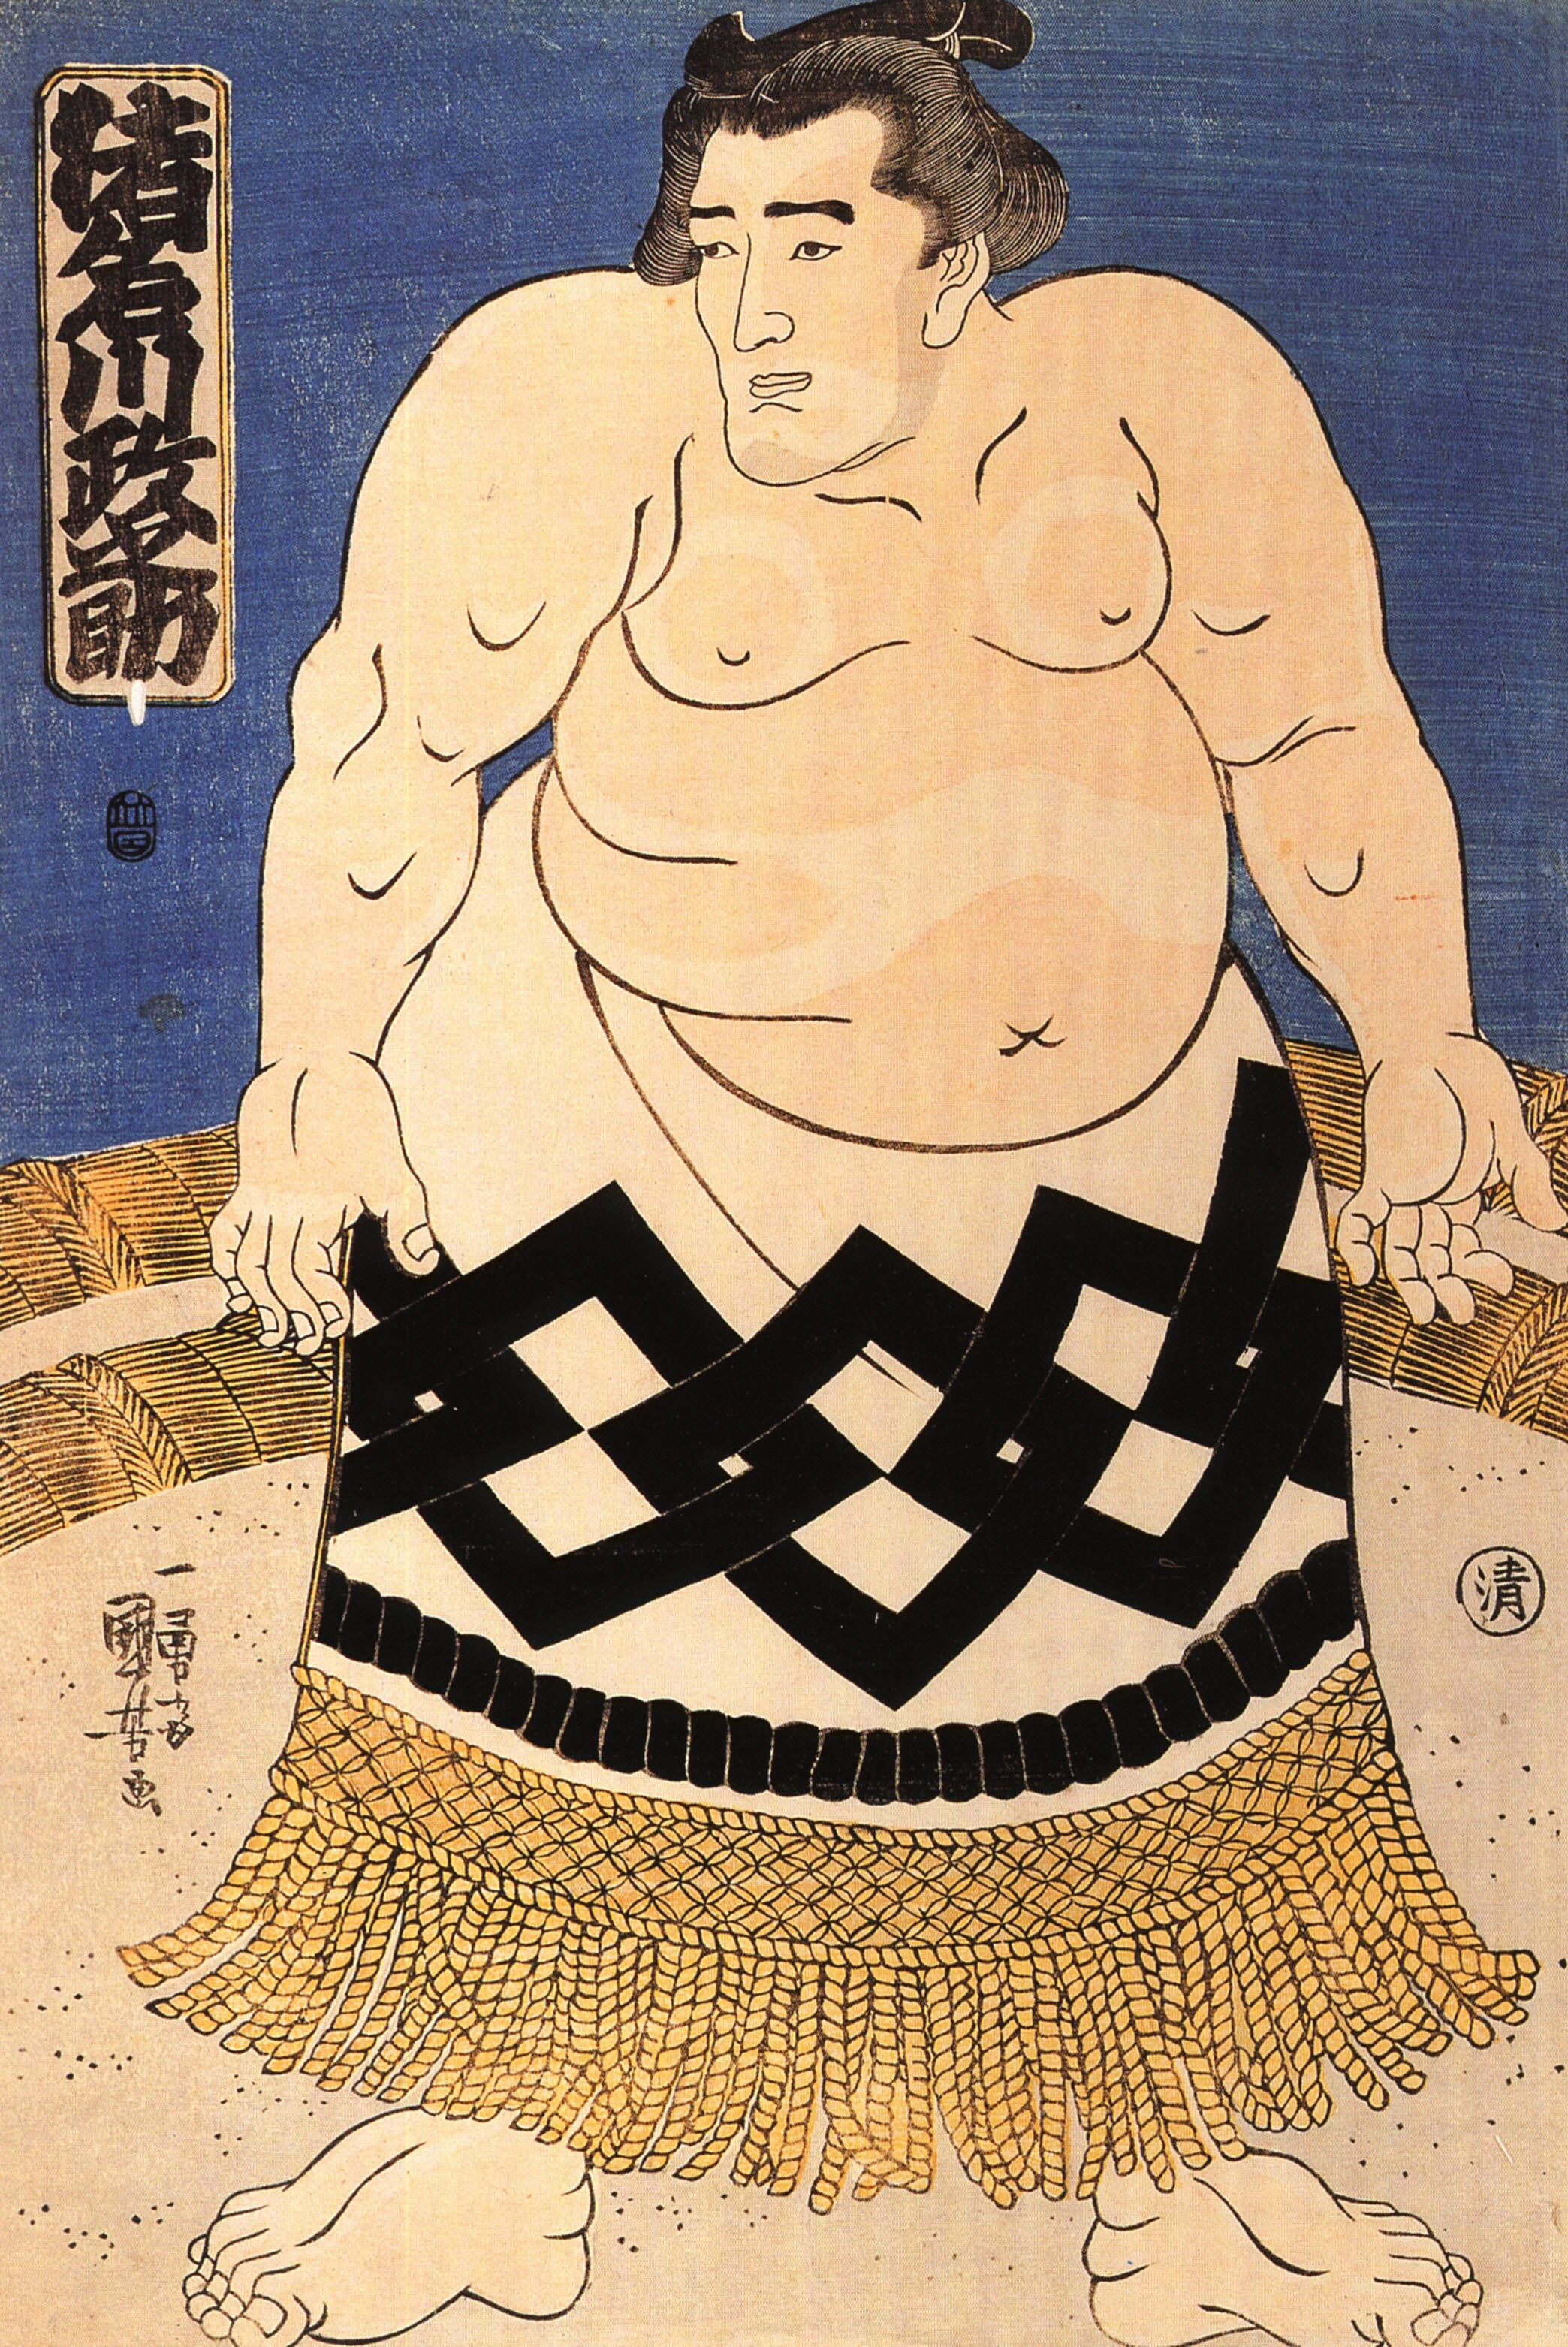 http://upload.wikimedia.org/wikipedia/commons/d/d3/Kuniyoshi_Utagawa%2C_The_sumo_wrestler.jpg